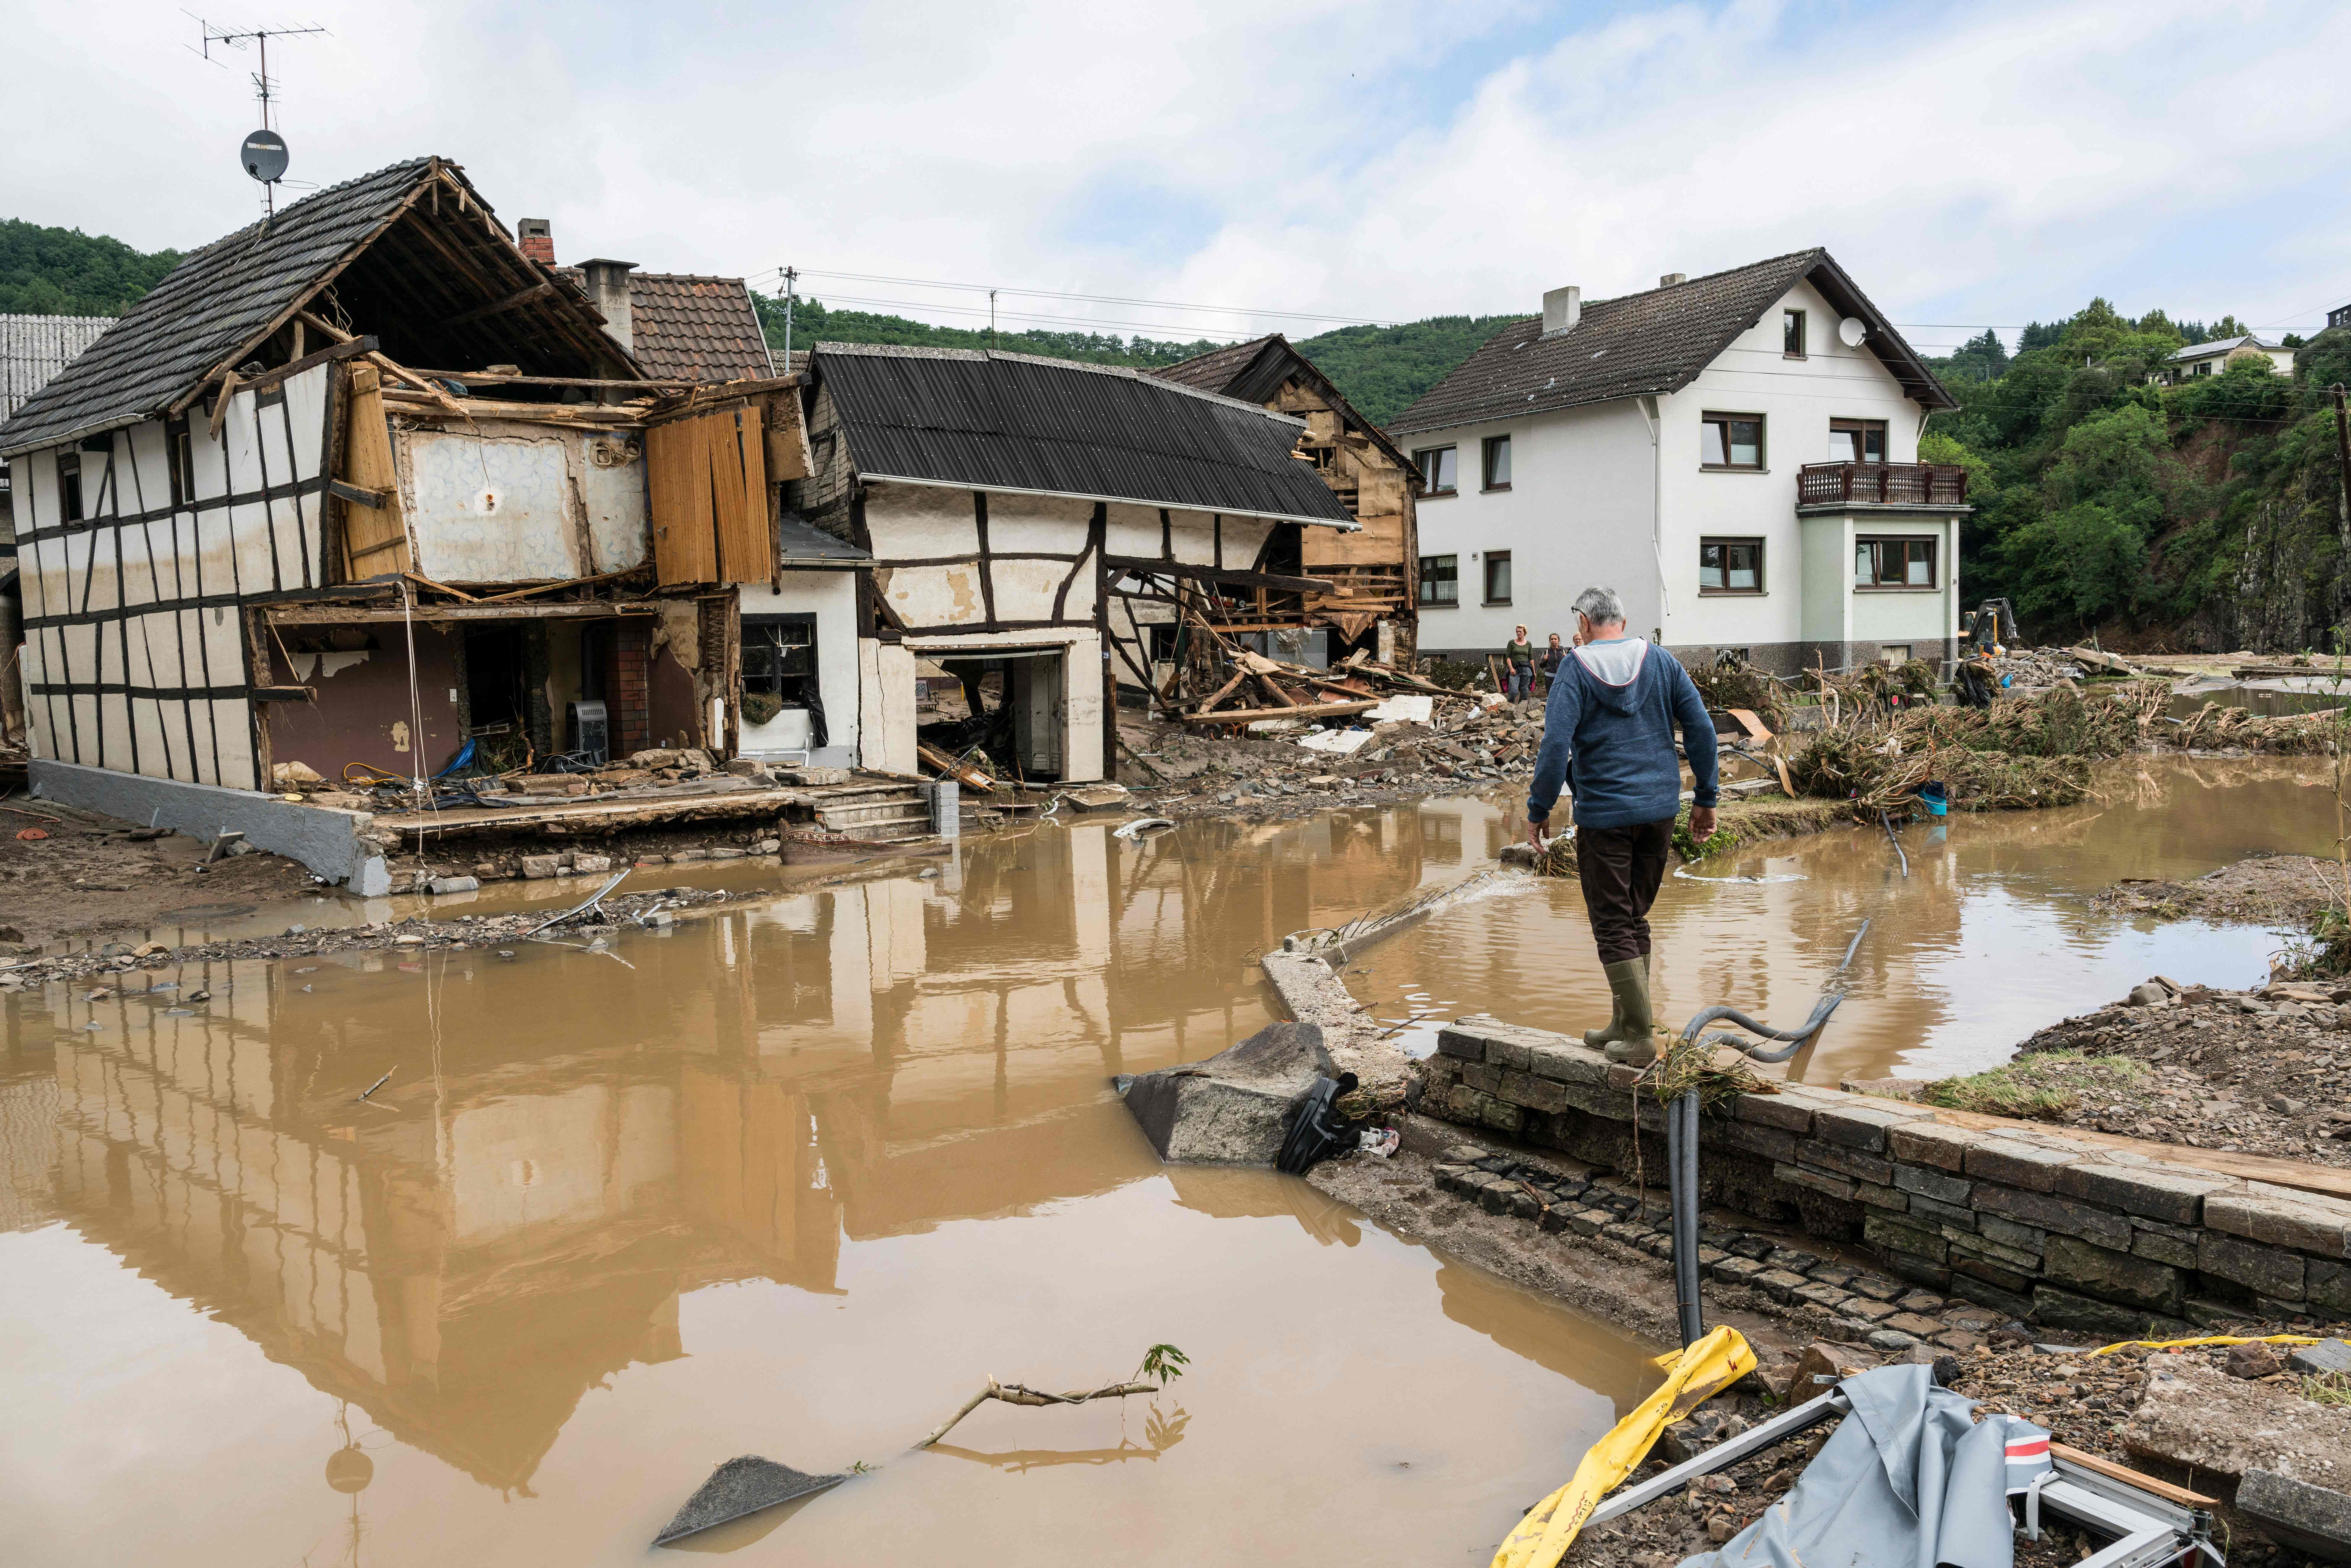 A man walks through the floods towards destroyed houses in Schuld near Bad Neuenahr, western Germany